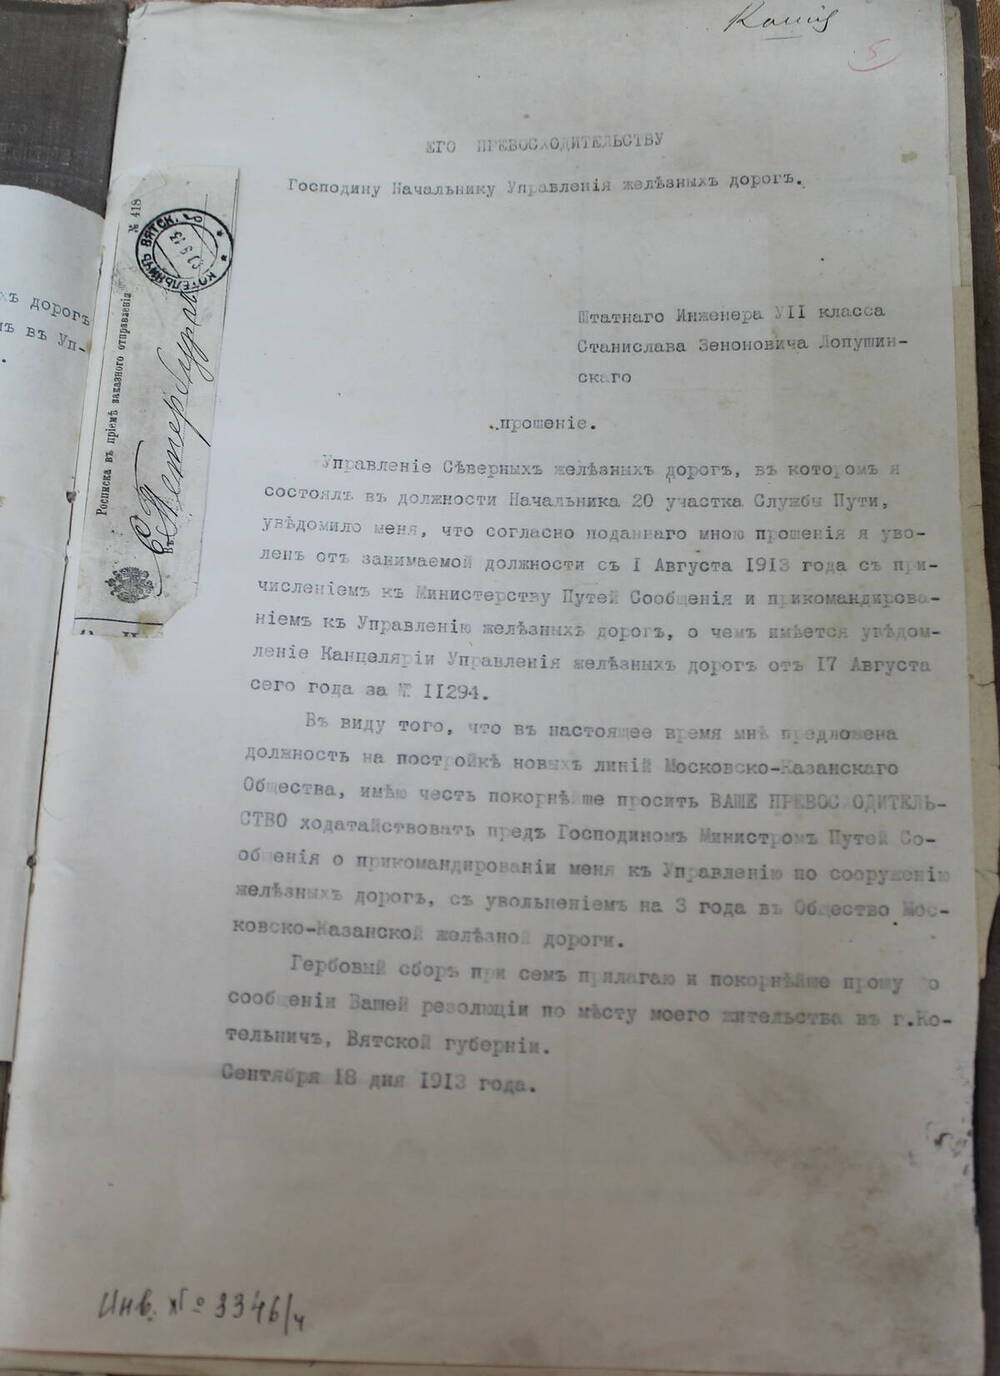 Документы из архива Лопушинского Станислава Зиновьевича, профессора, инженер ж/д